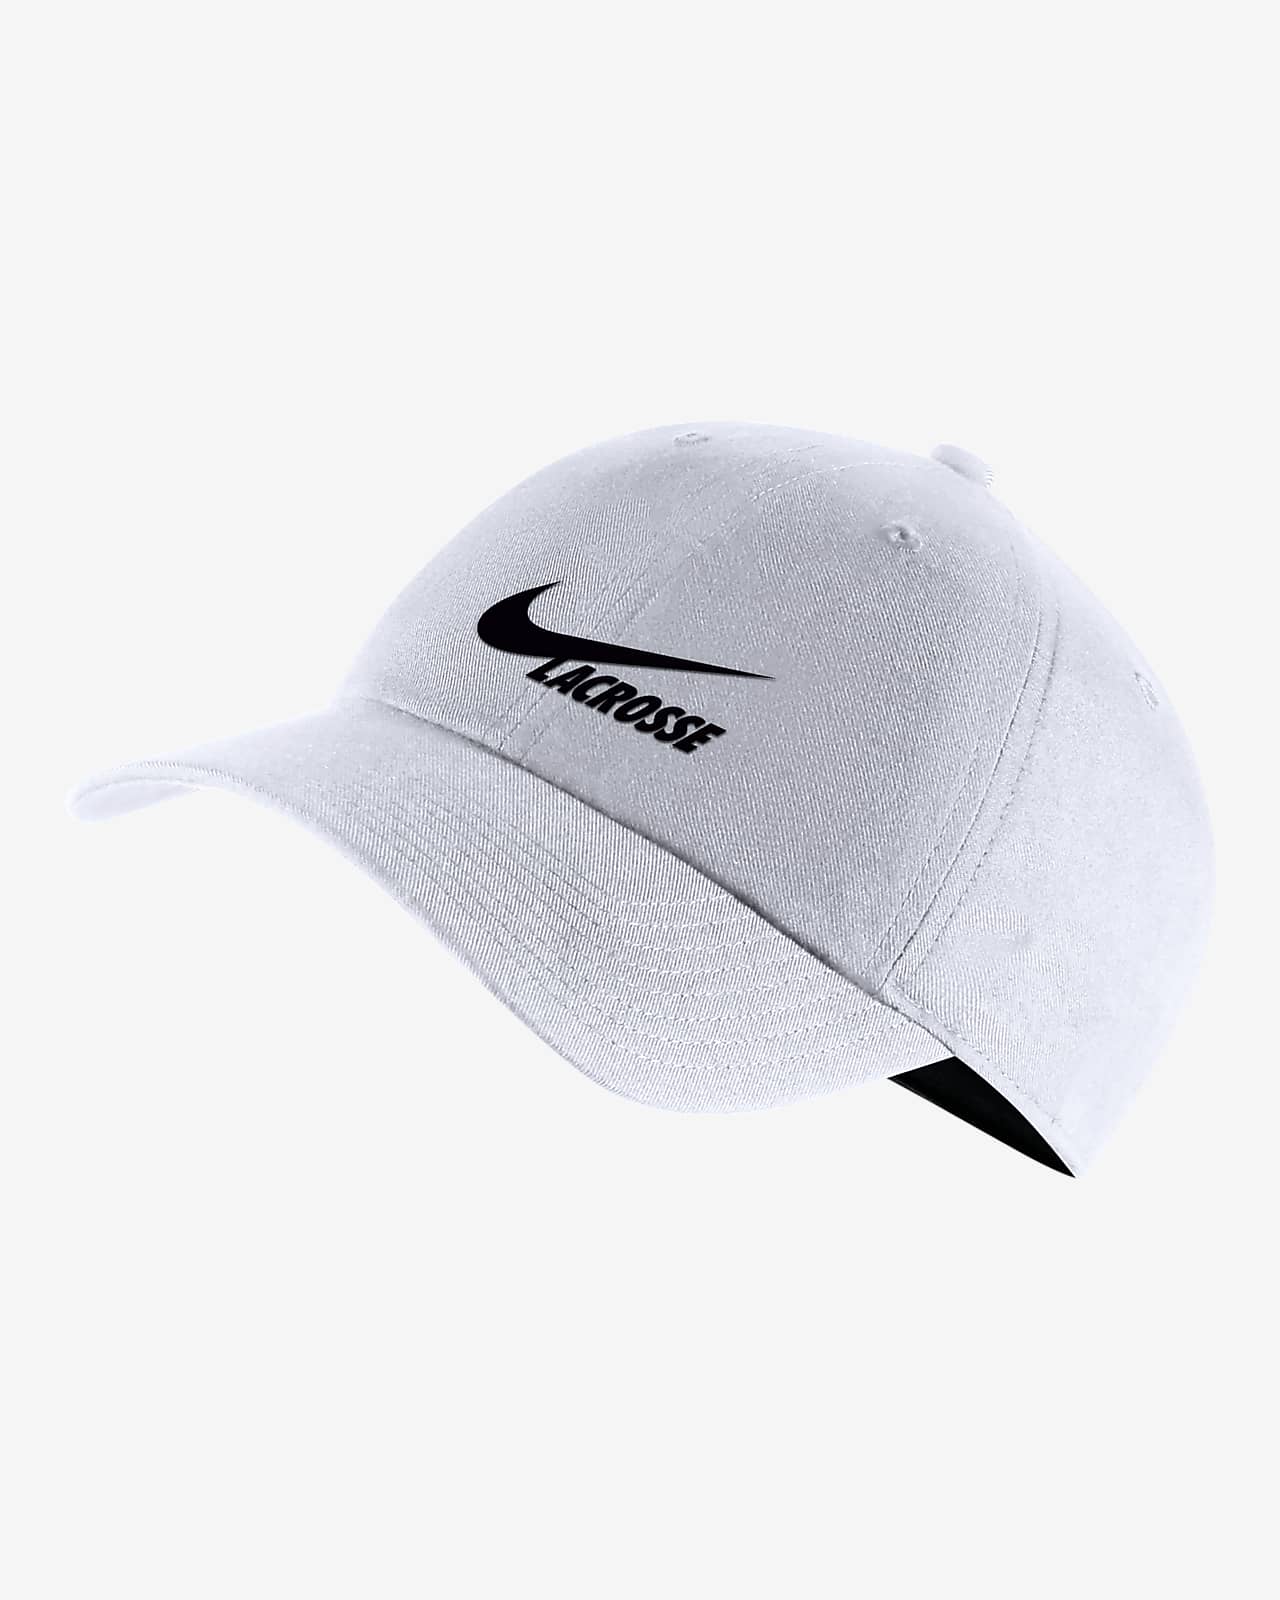 Nike Cap. Nike.com